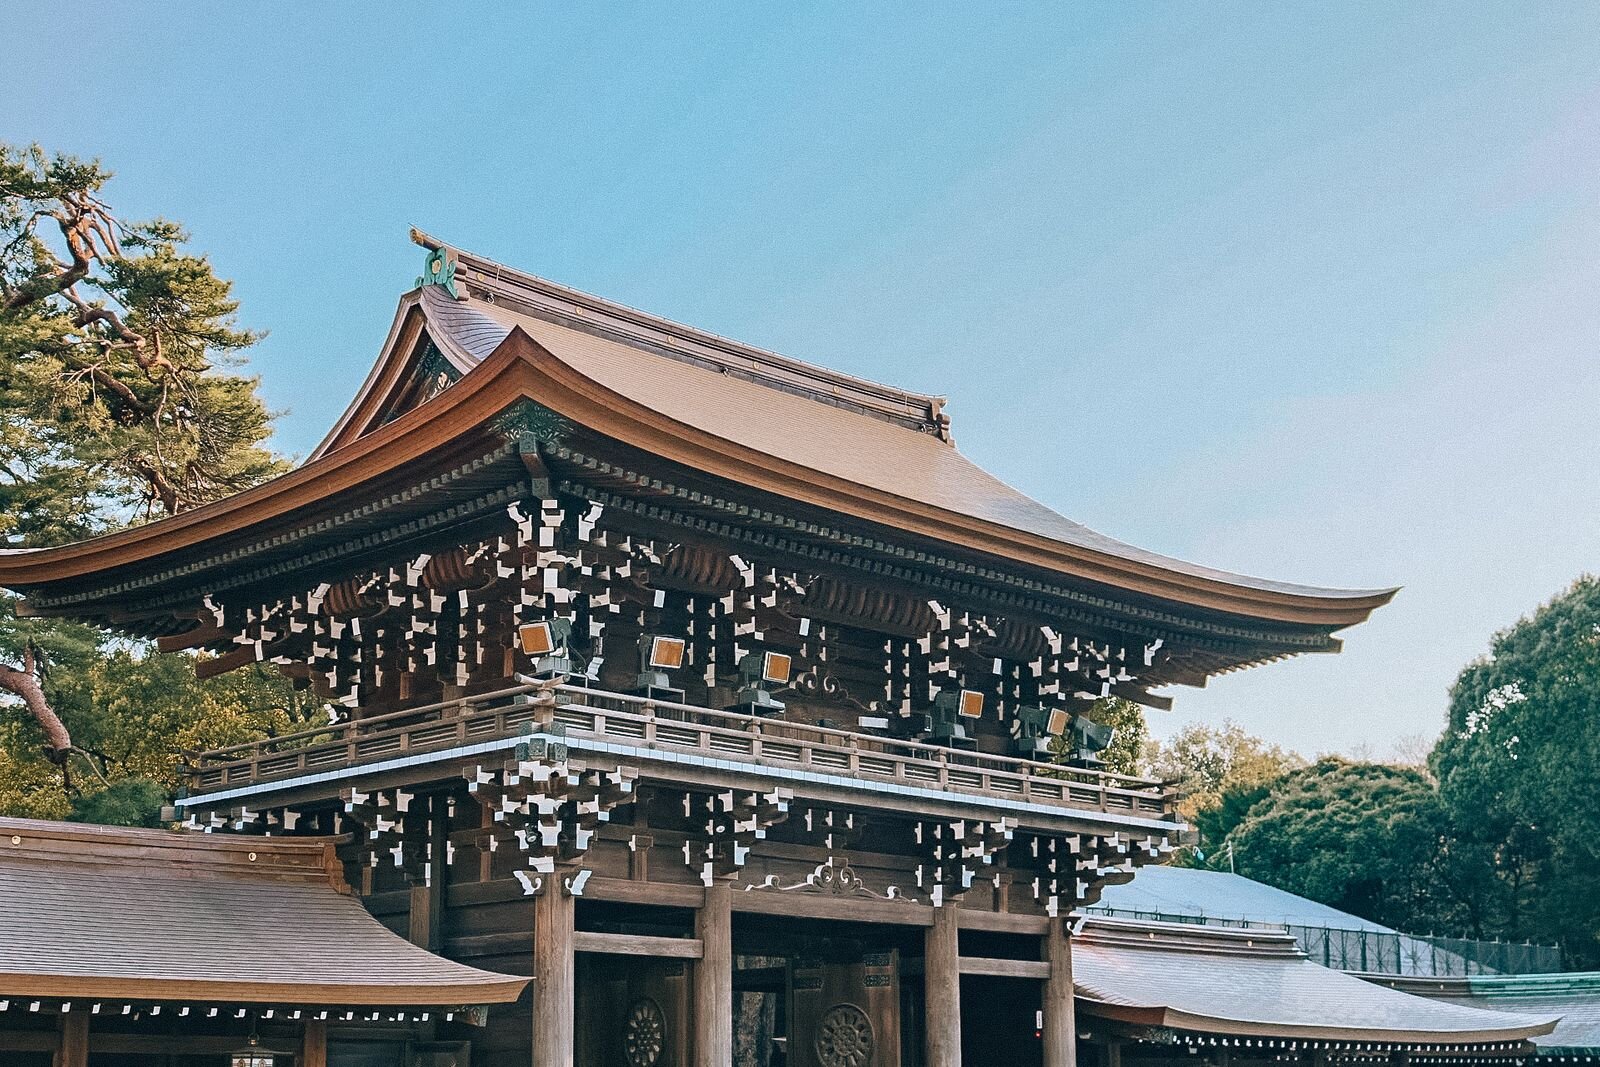 A large ornate wooden gate at a Meiji shrine in Tokyo